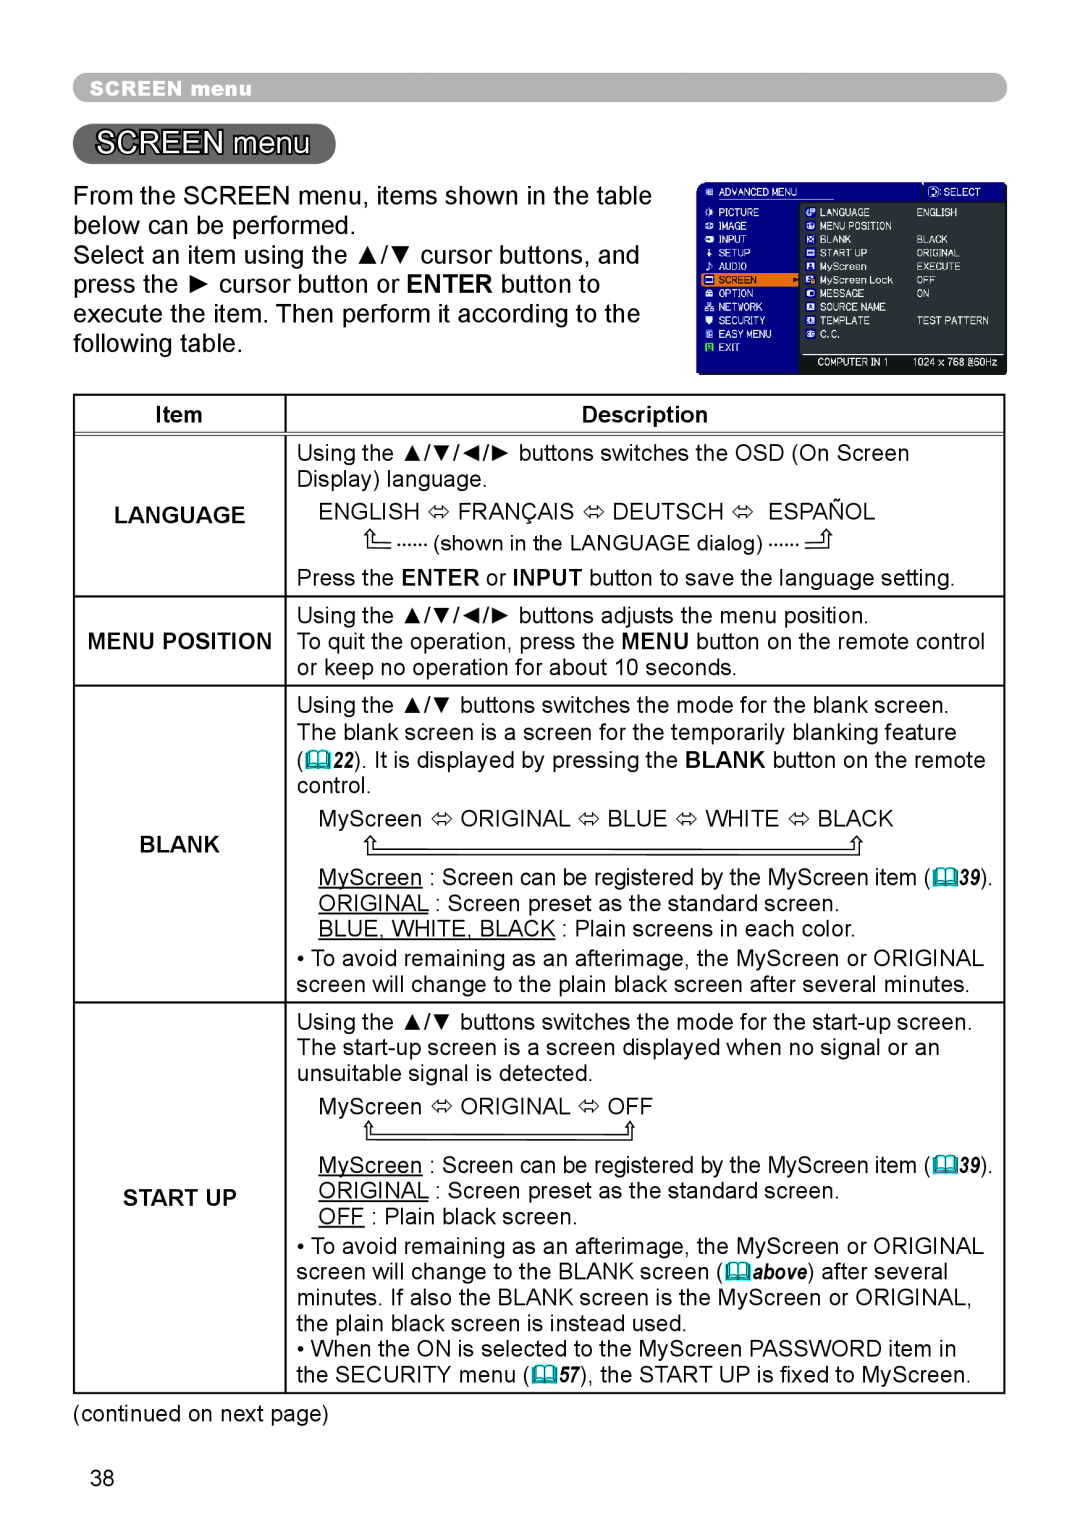 Dukane 8755J-RJ, 8920H-RJ, 8919H-RJ user manual SCREEN menu, Description, Language, Blank, Start Up 